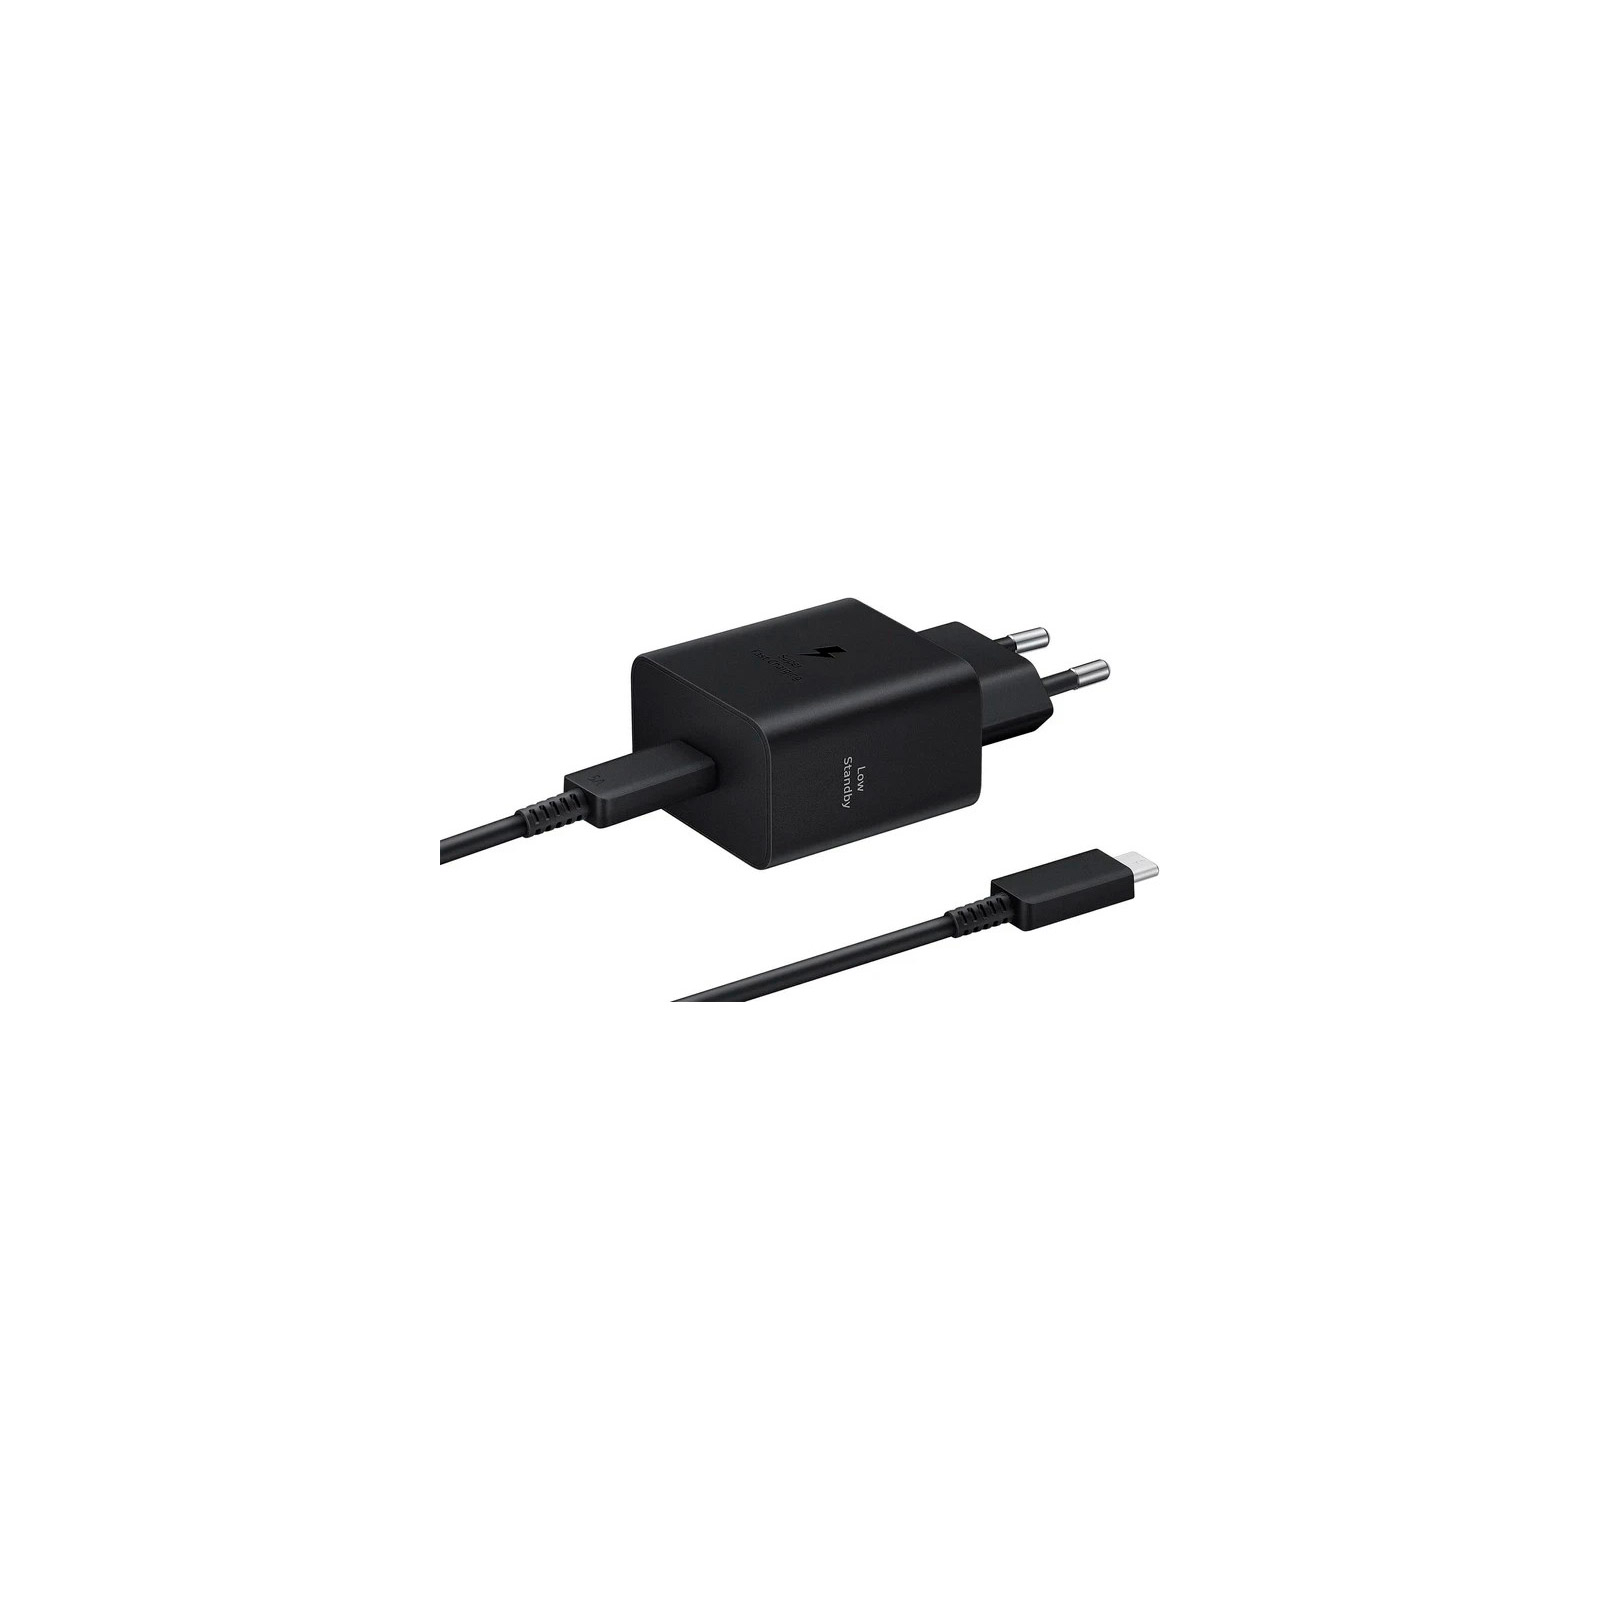 Зарядний пристрій Samsung 45W Compact Power Adapter (w C to C Cable) Black (EP-T4511XBEGEU)